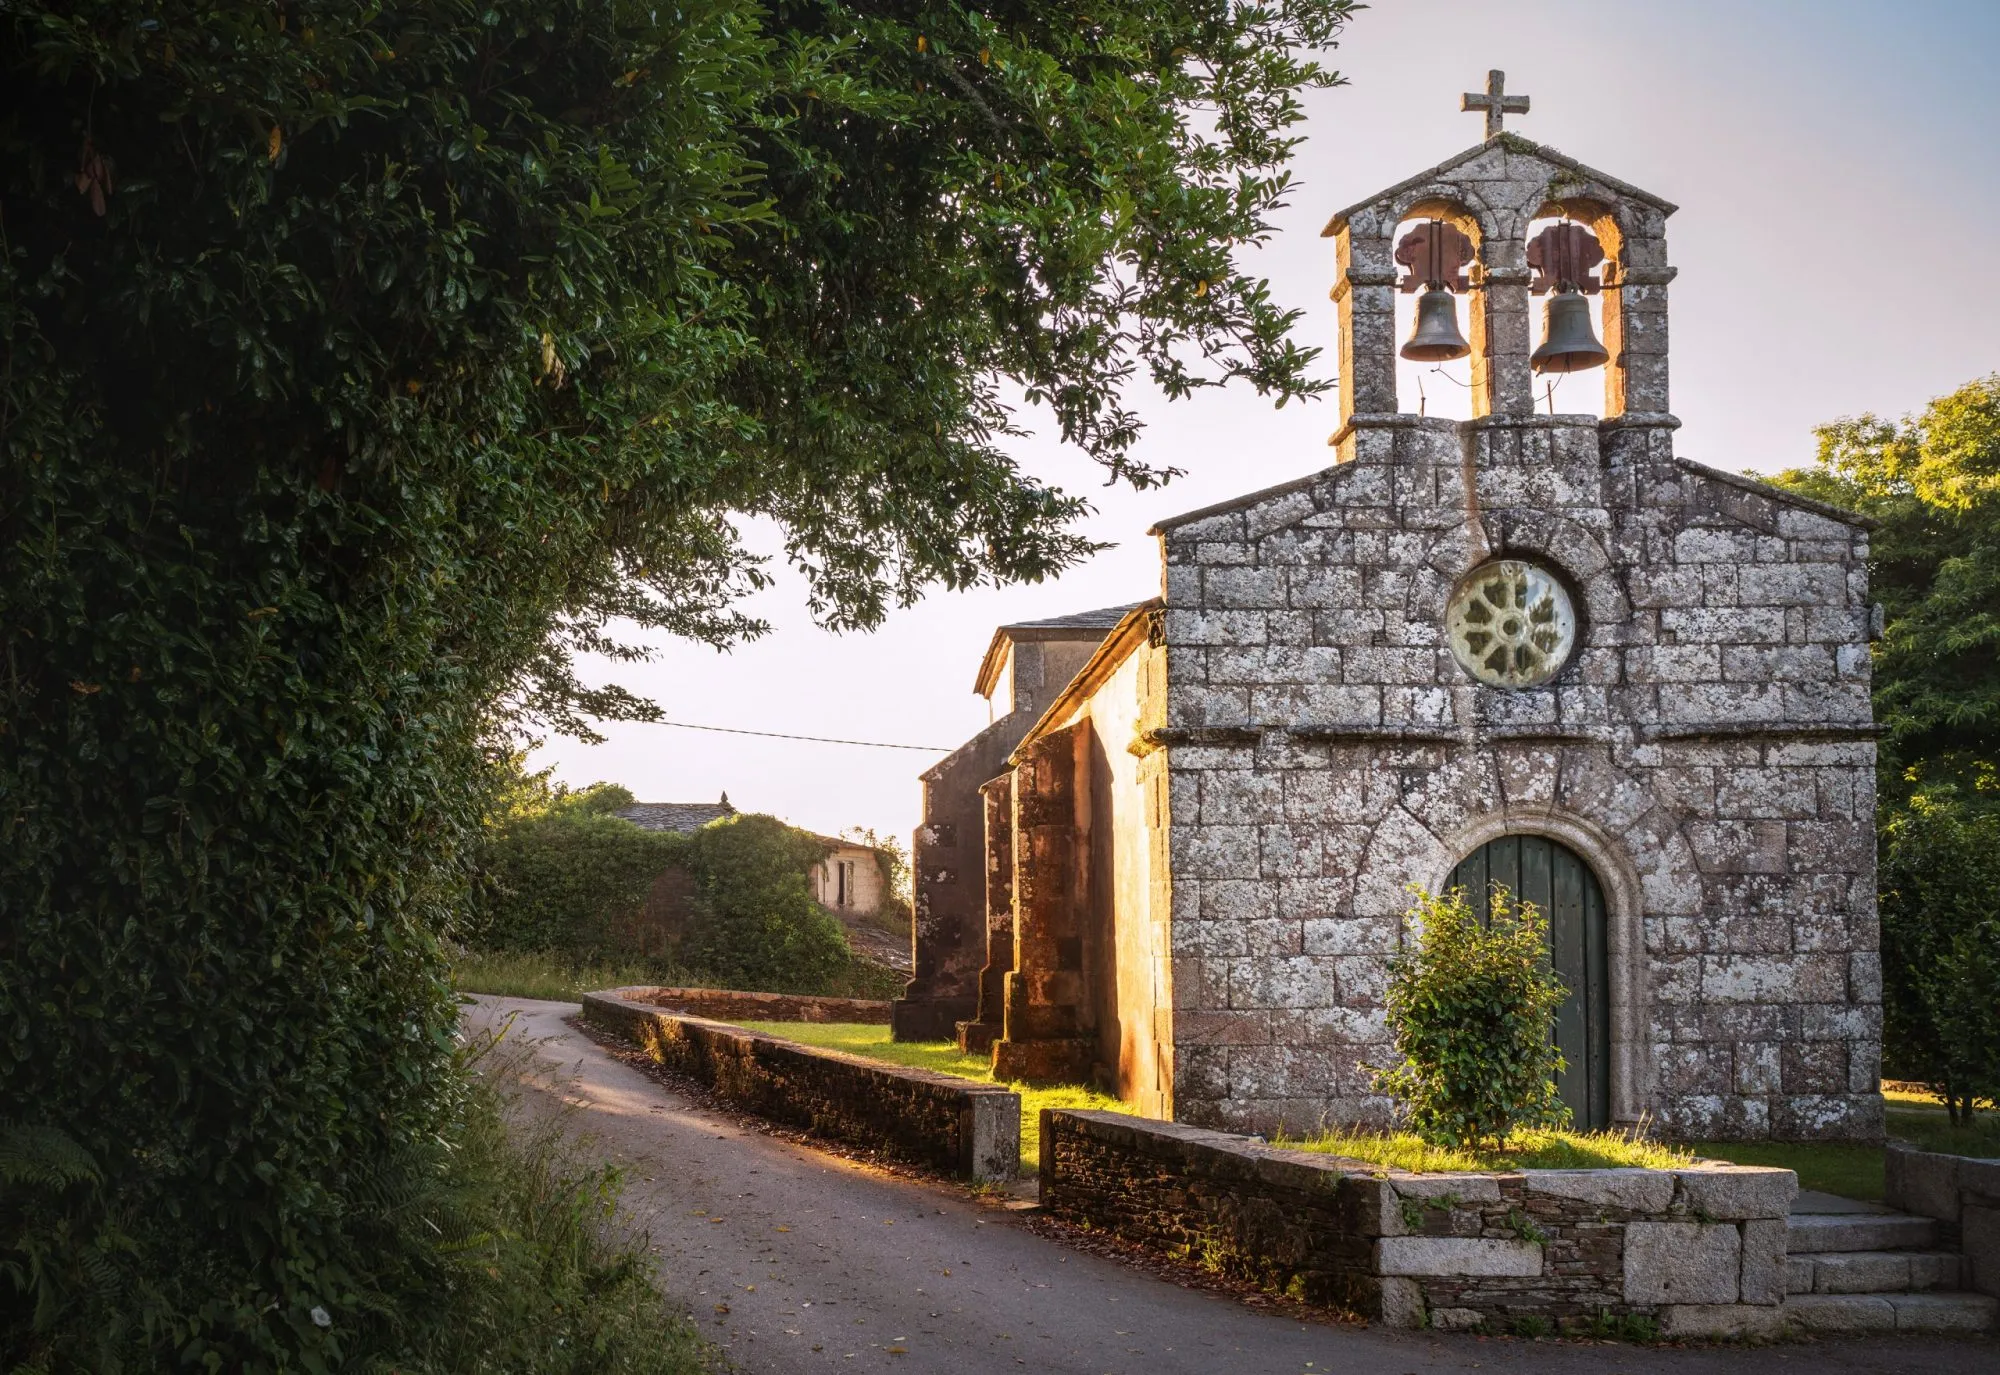 By the Camino de Santiago Way route . Igrexa de Santa Maria de Abadin church in Abadin, Galicia, Spain.